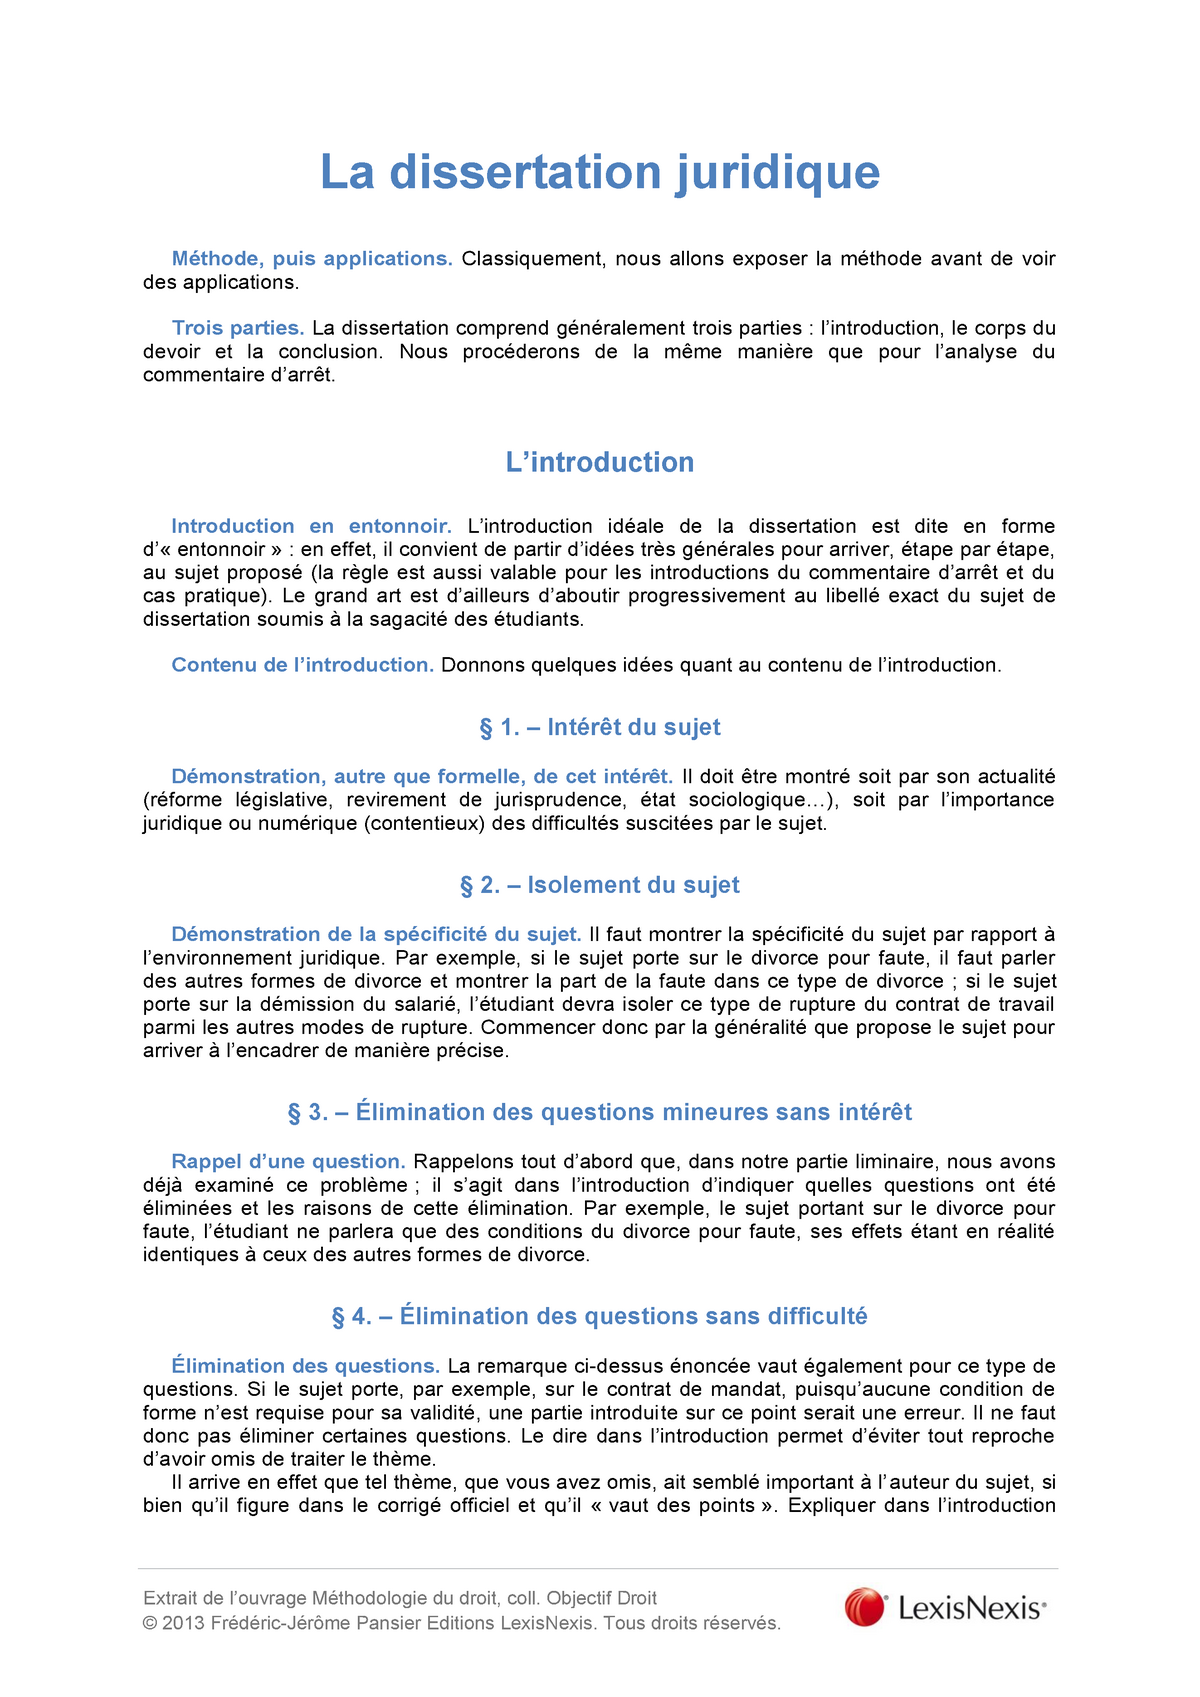 La Dissertation Juridique Studocu Revirement De Jurisprudence 